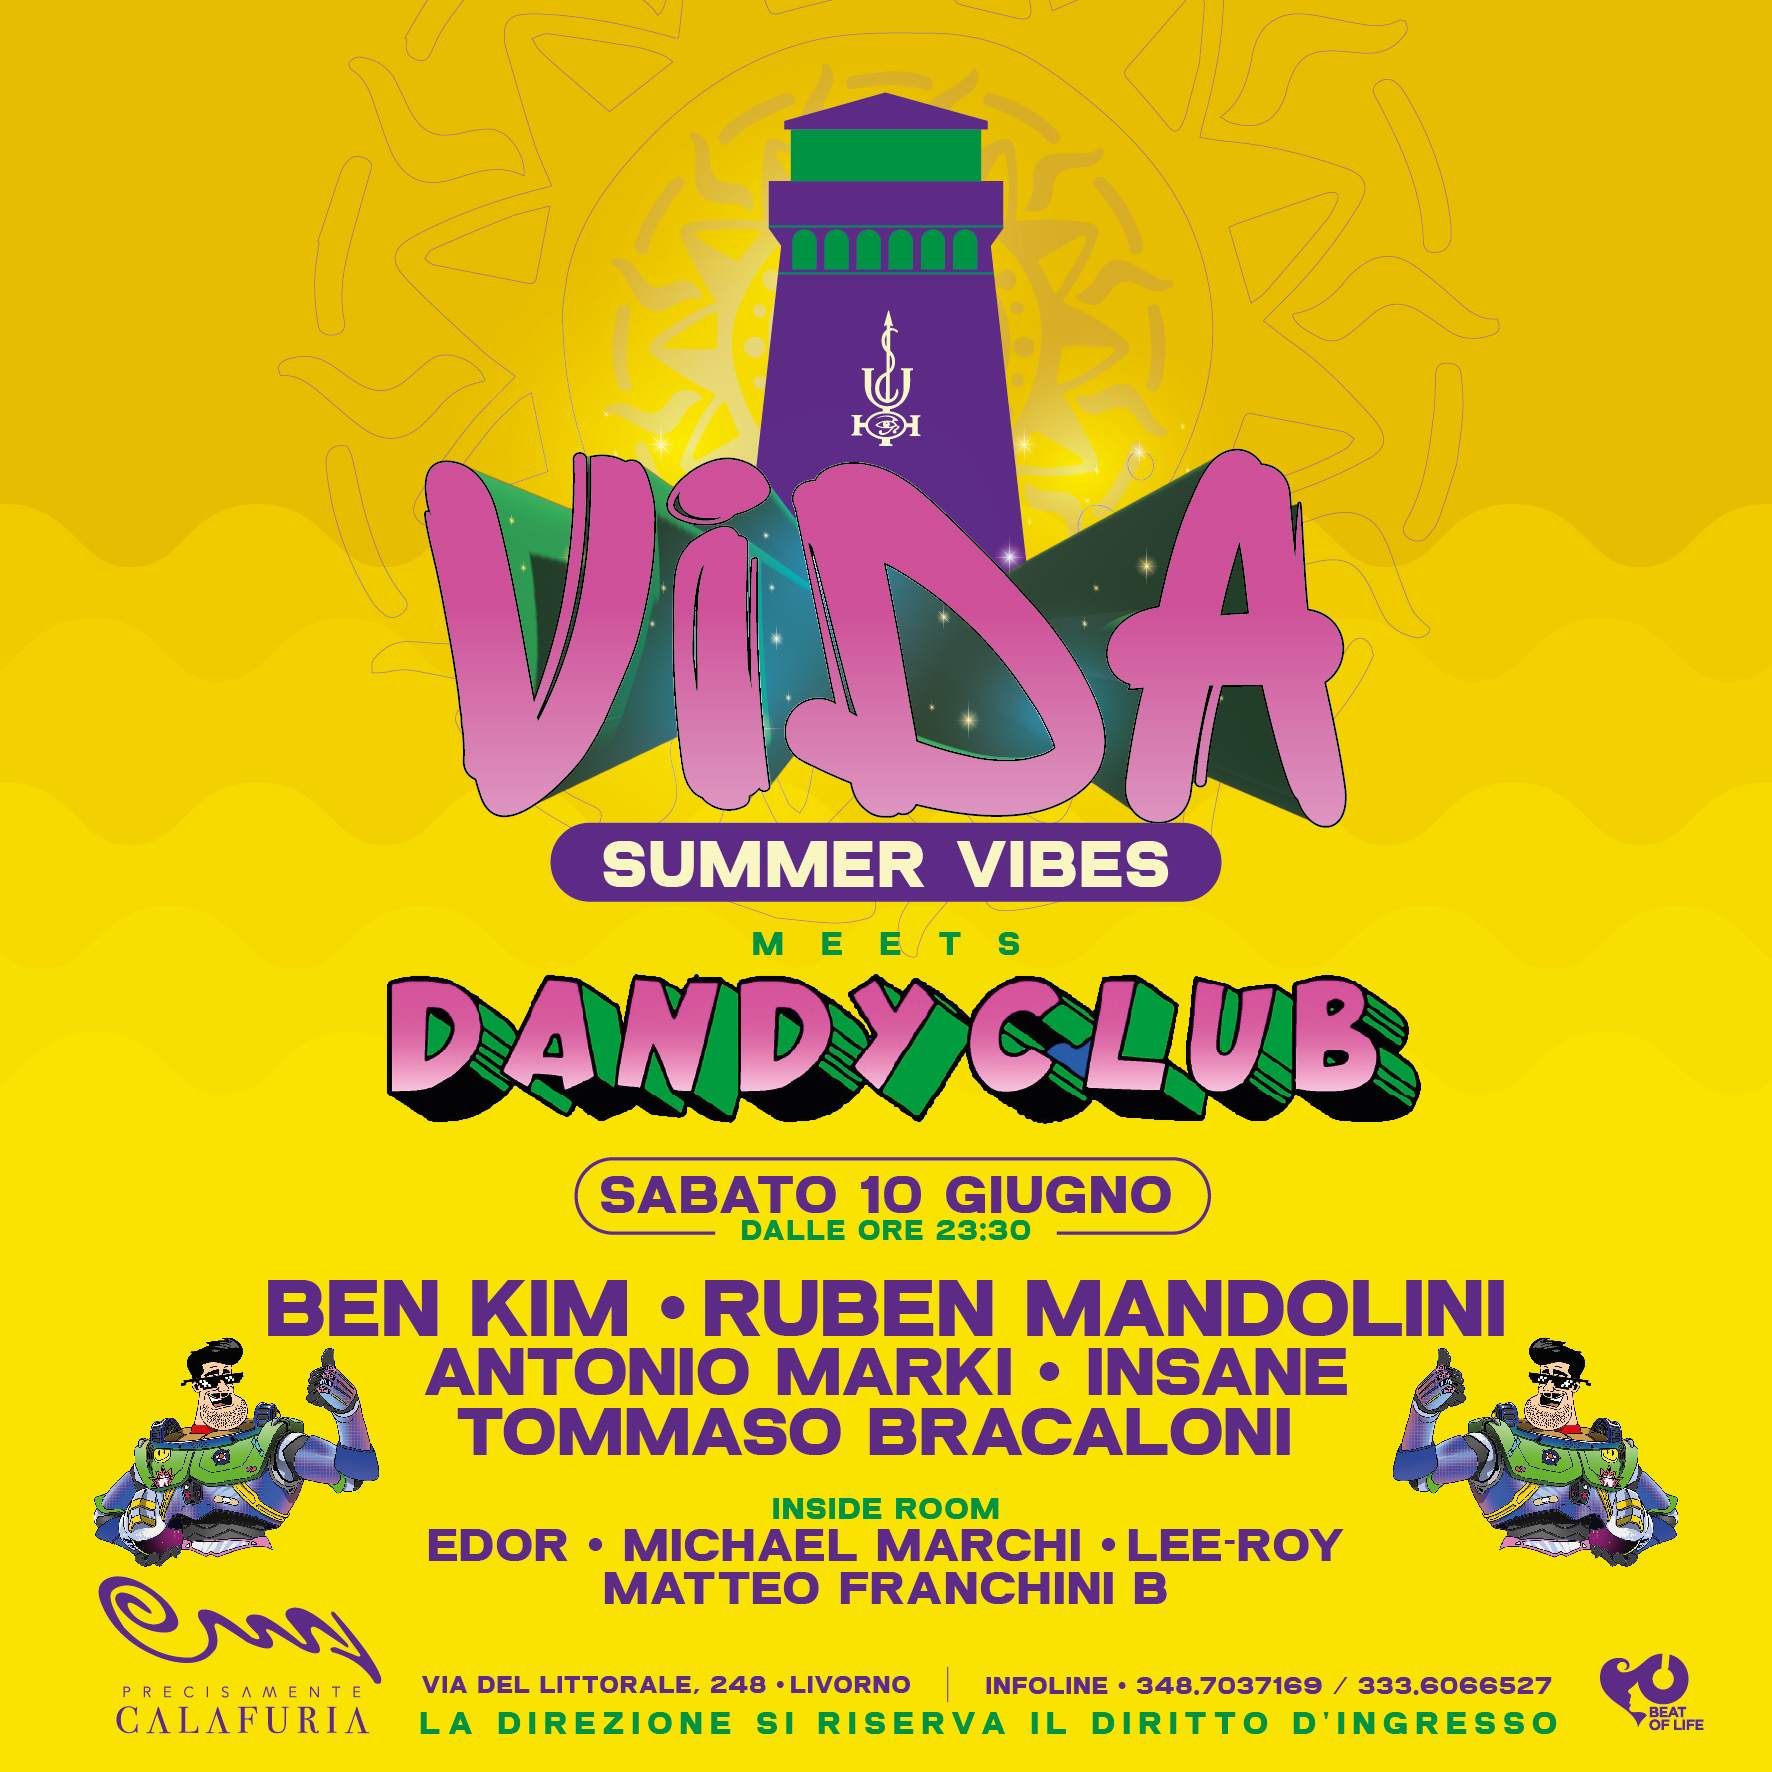 Vida Summer Vibes meets Dandy Club - Página trasera